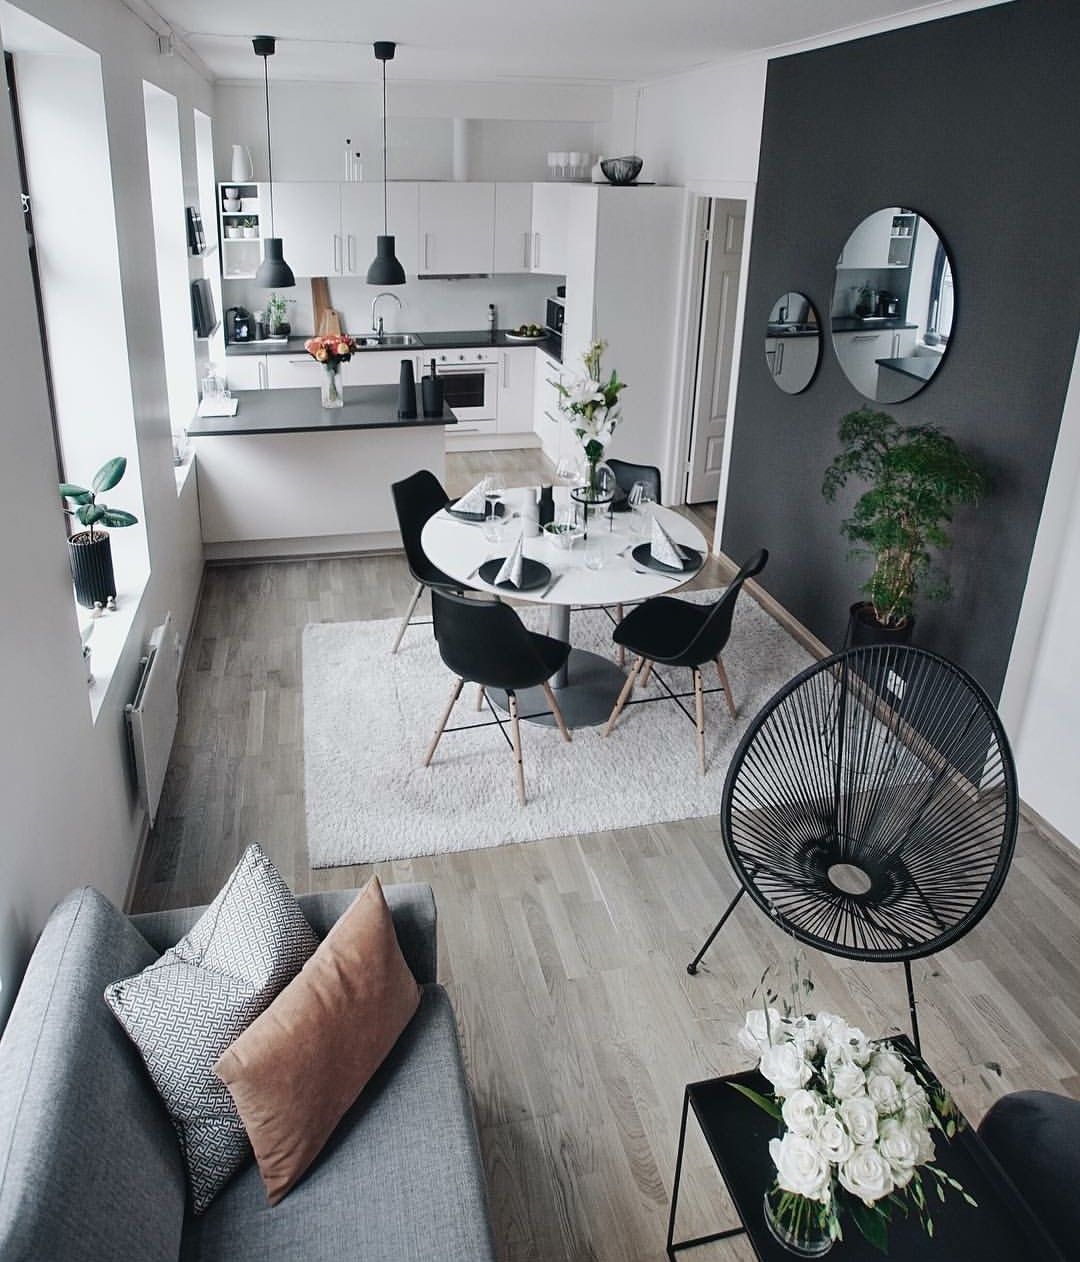 15 home decor for cheap living room ideas